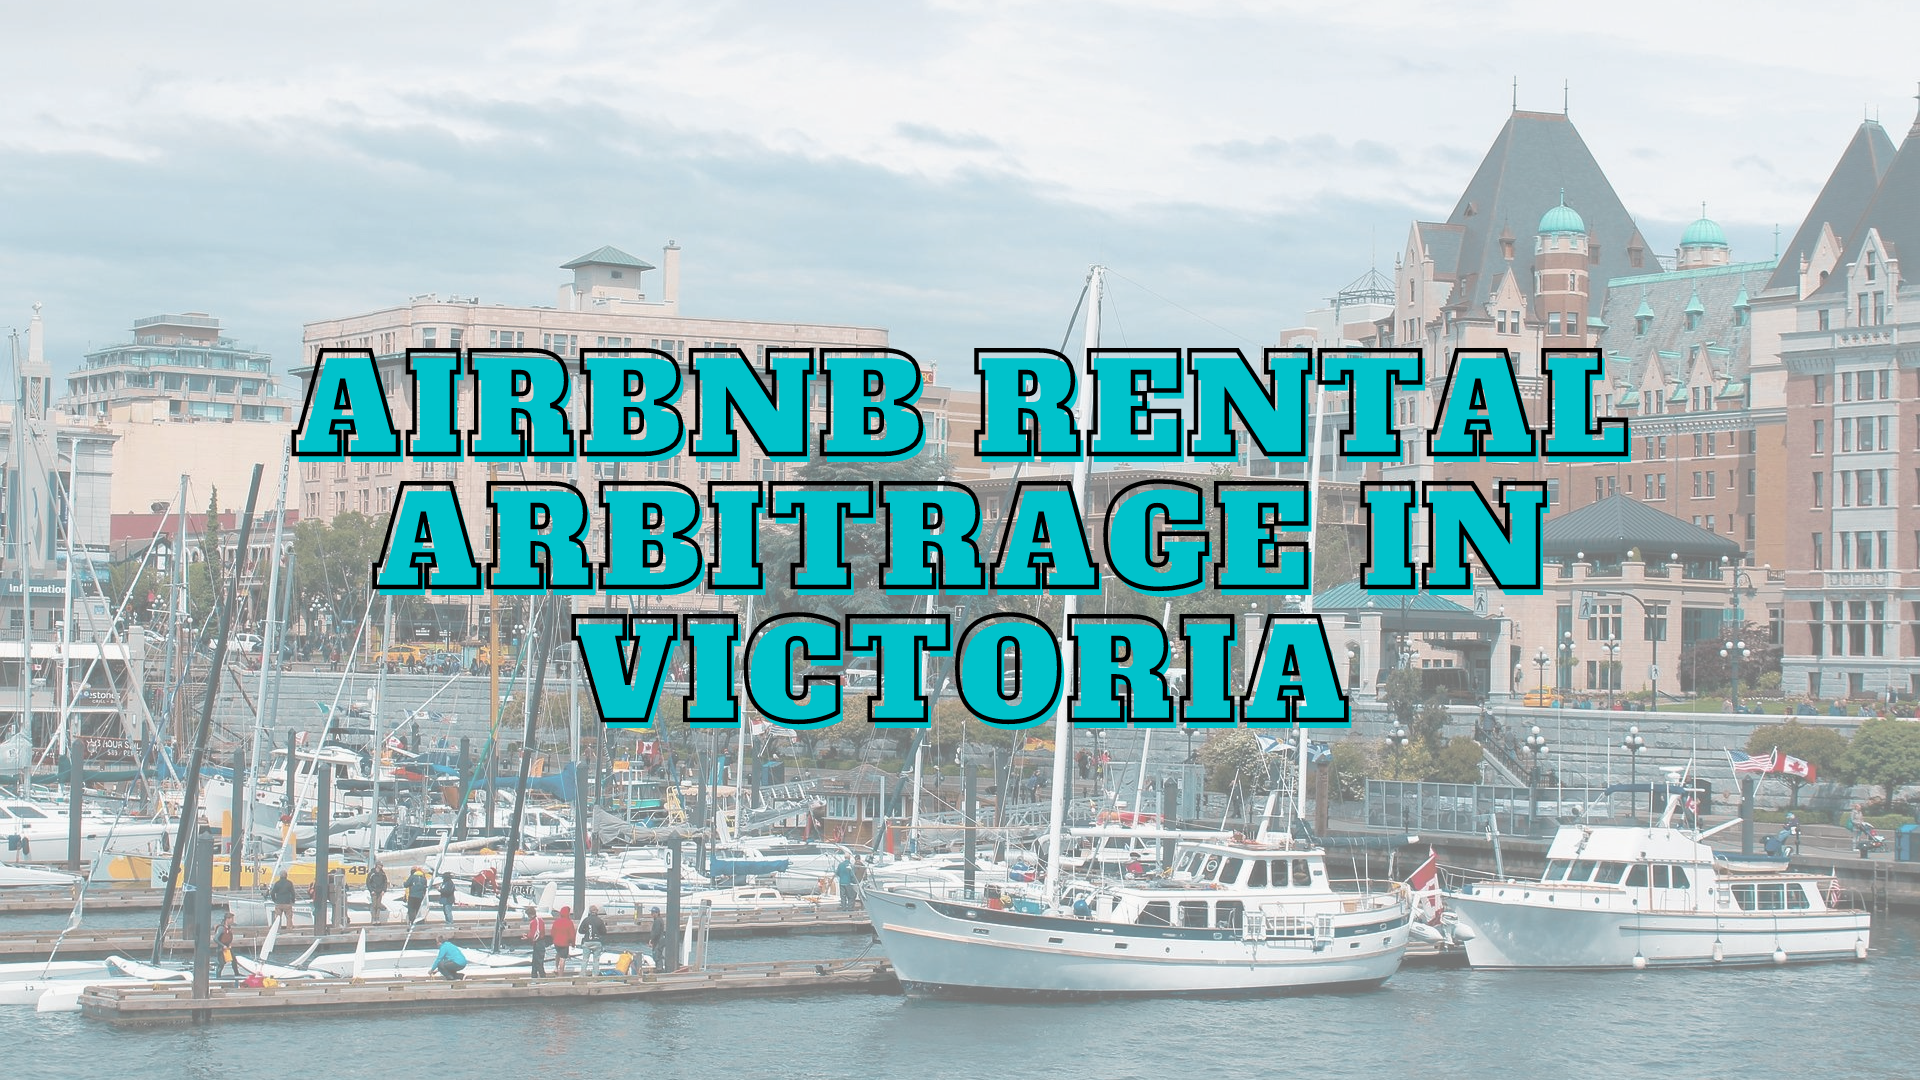 Victoria airbnb rental arbitrage